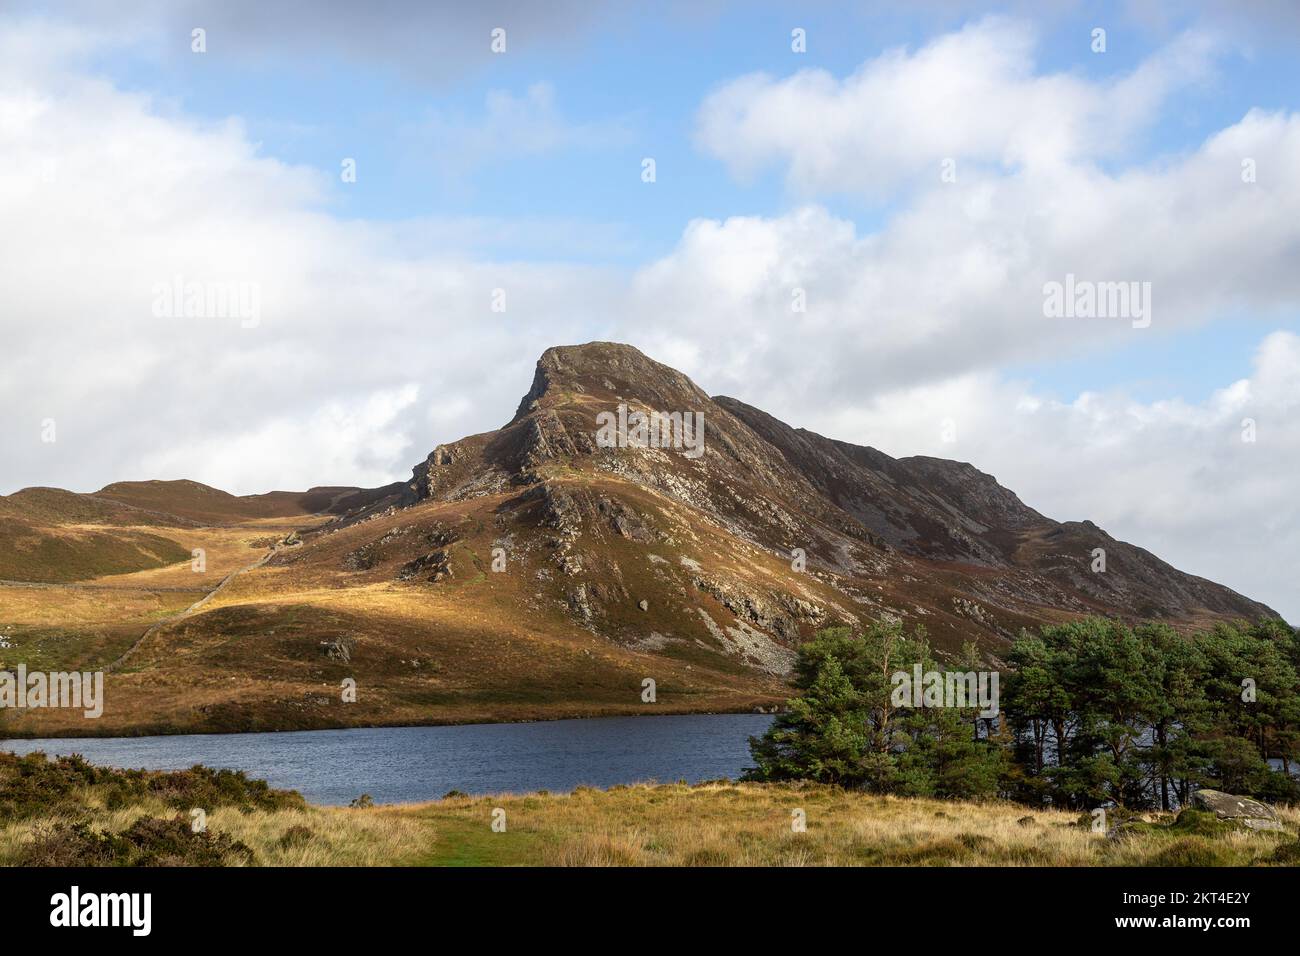 Cregennan Lakes backed by the peak of Bryn Brith, Snowdonia National Park, Gwynedd, North Wales Stock Photo